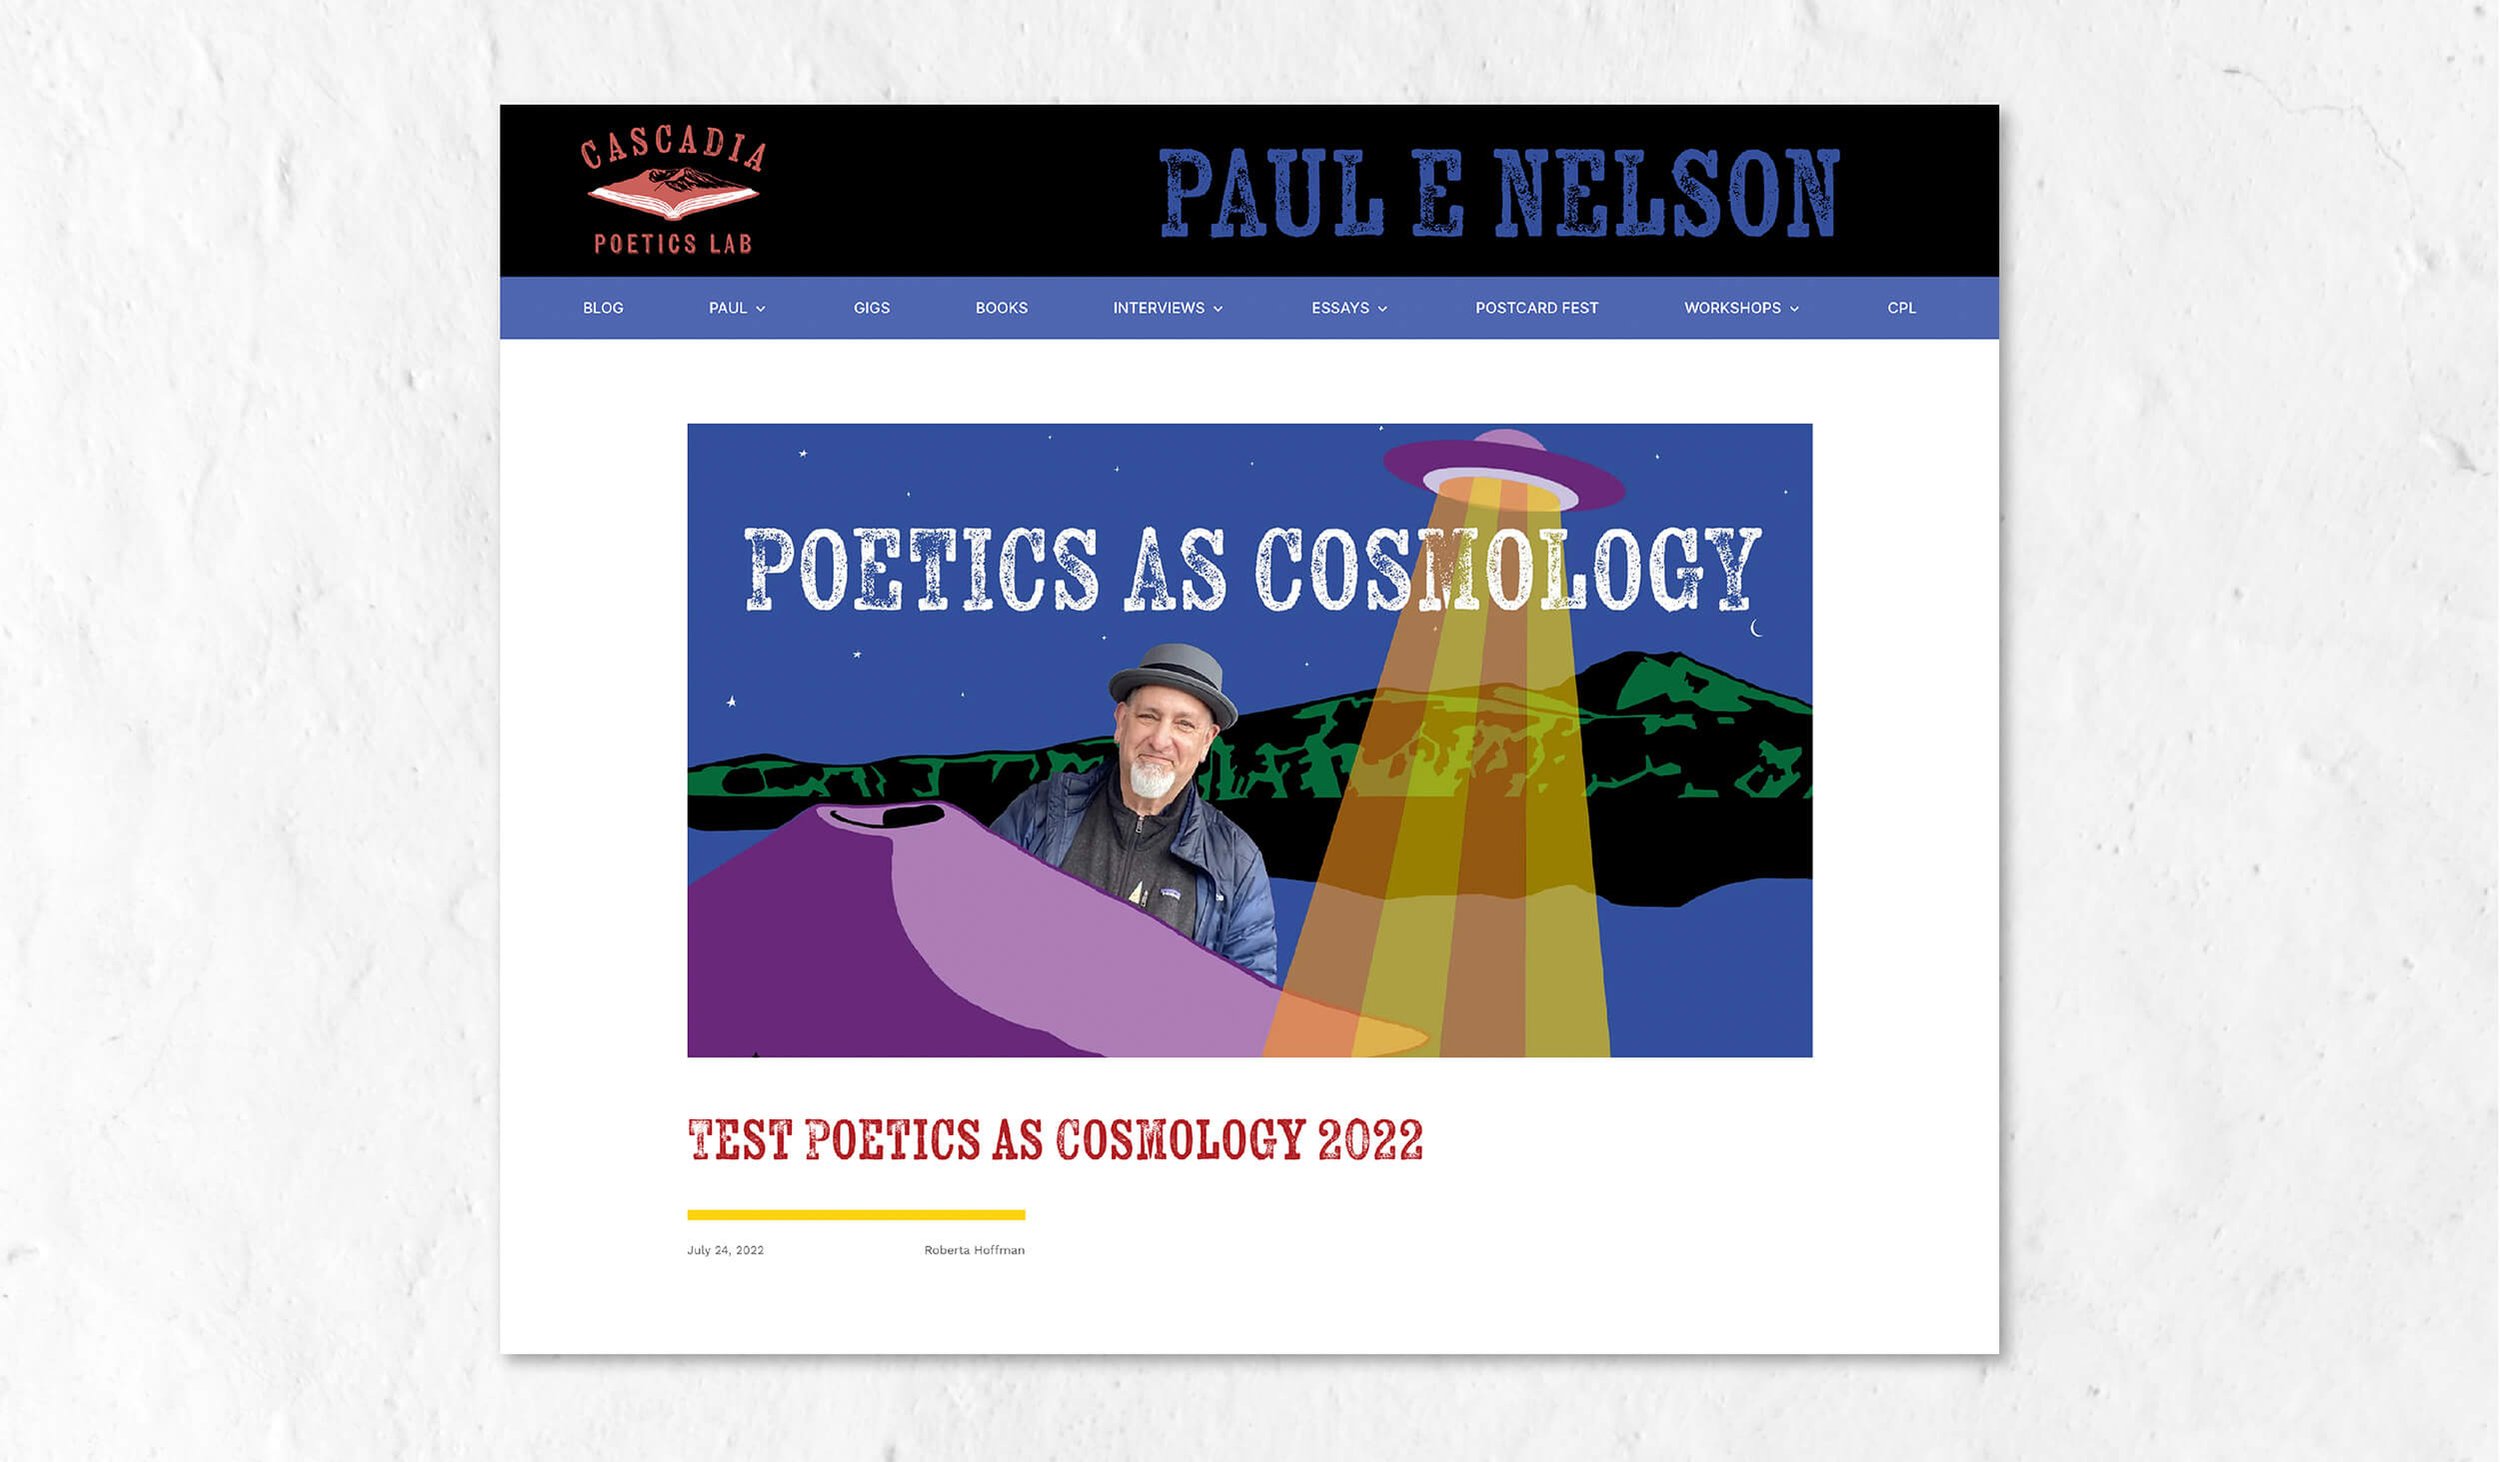 Web hero: Poetics as Cosmology Workshop